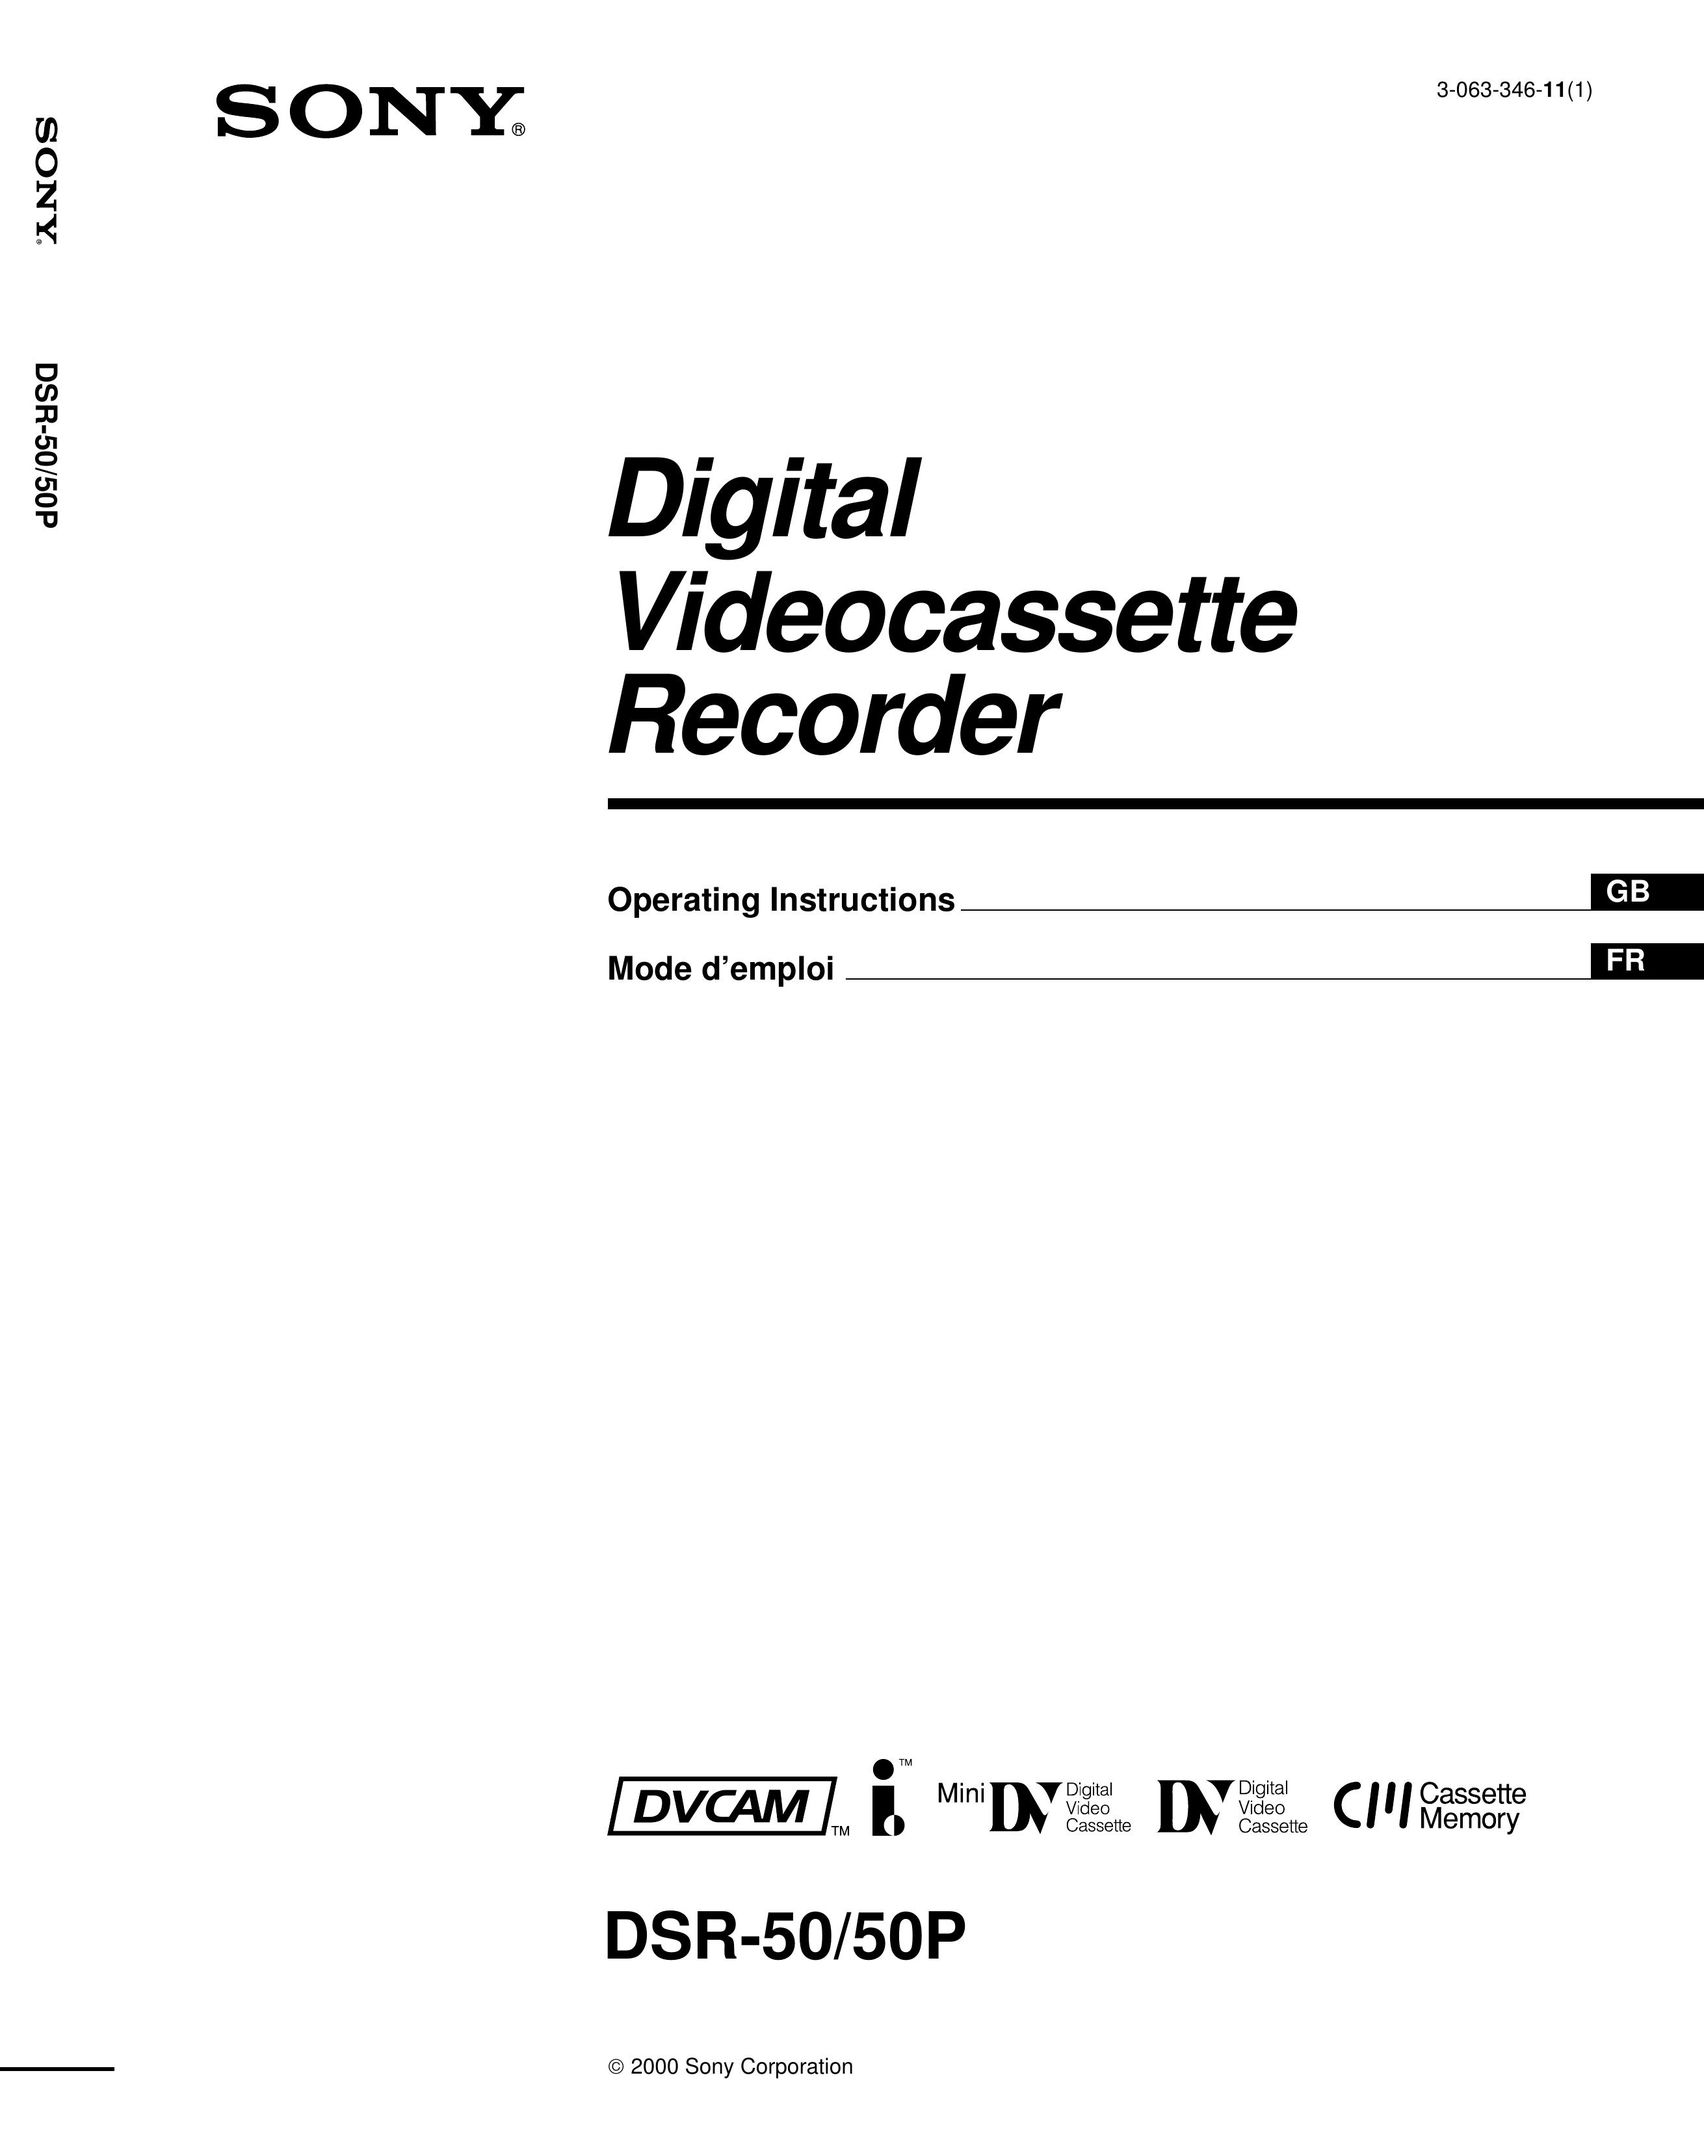 Sony DSR-50 VCR User Manual